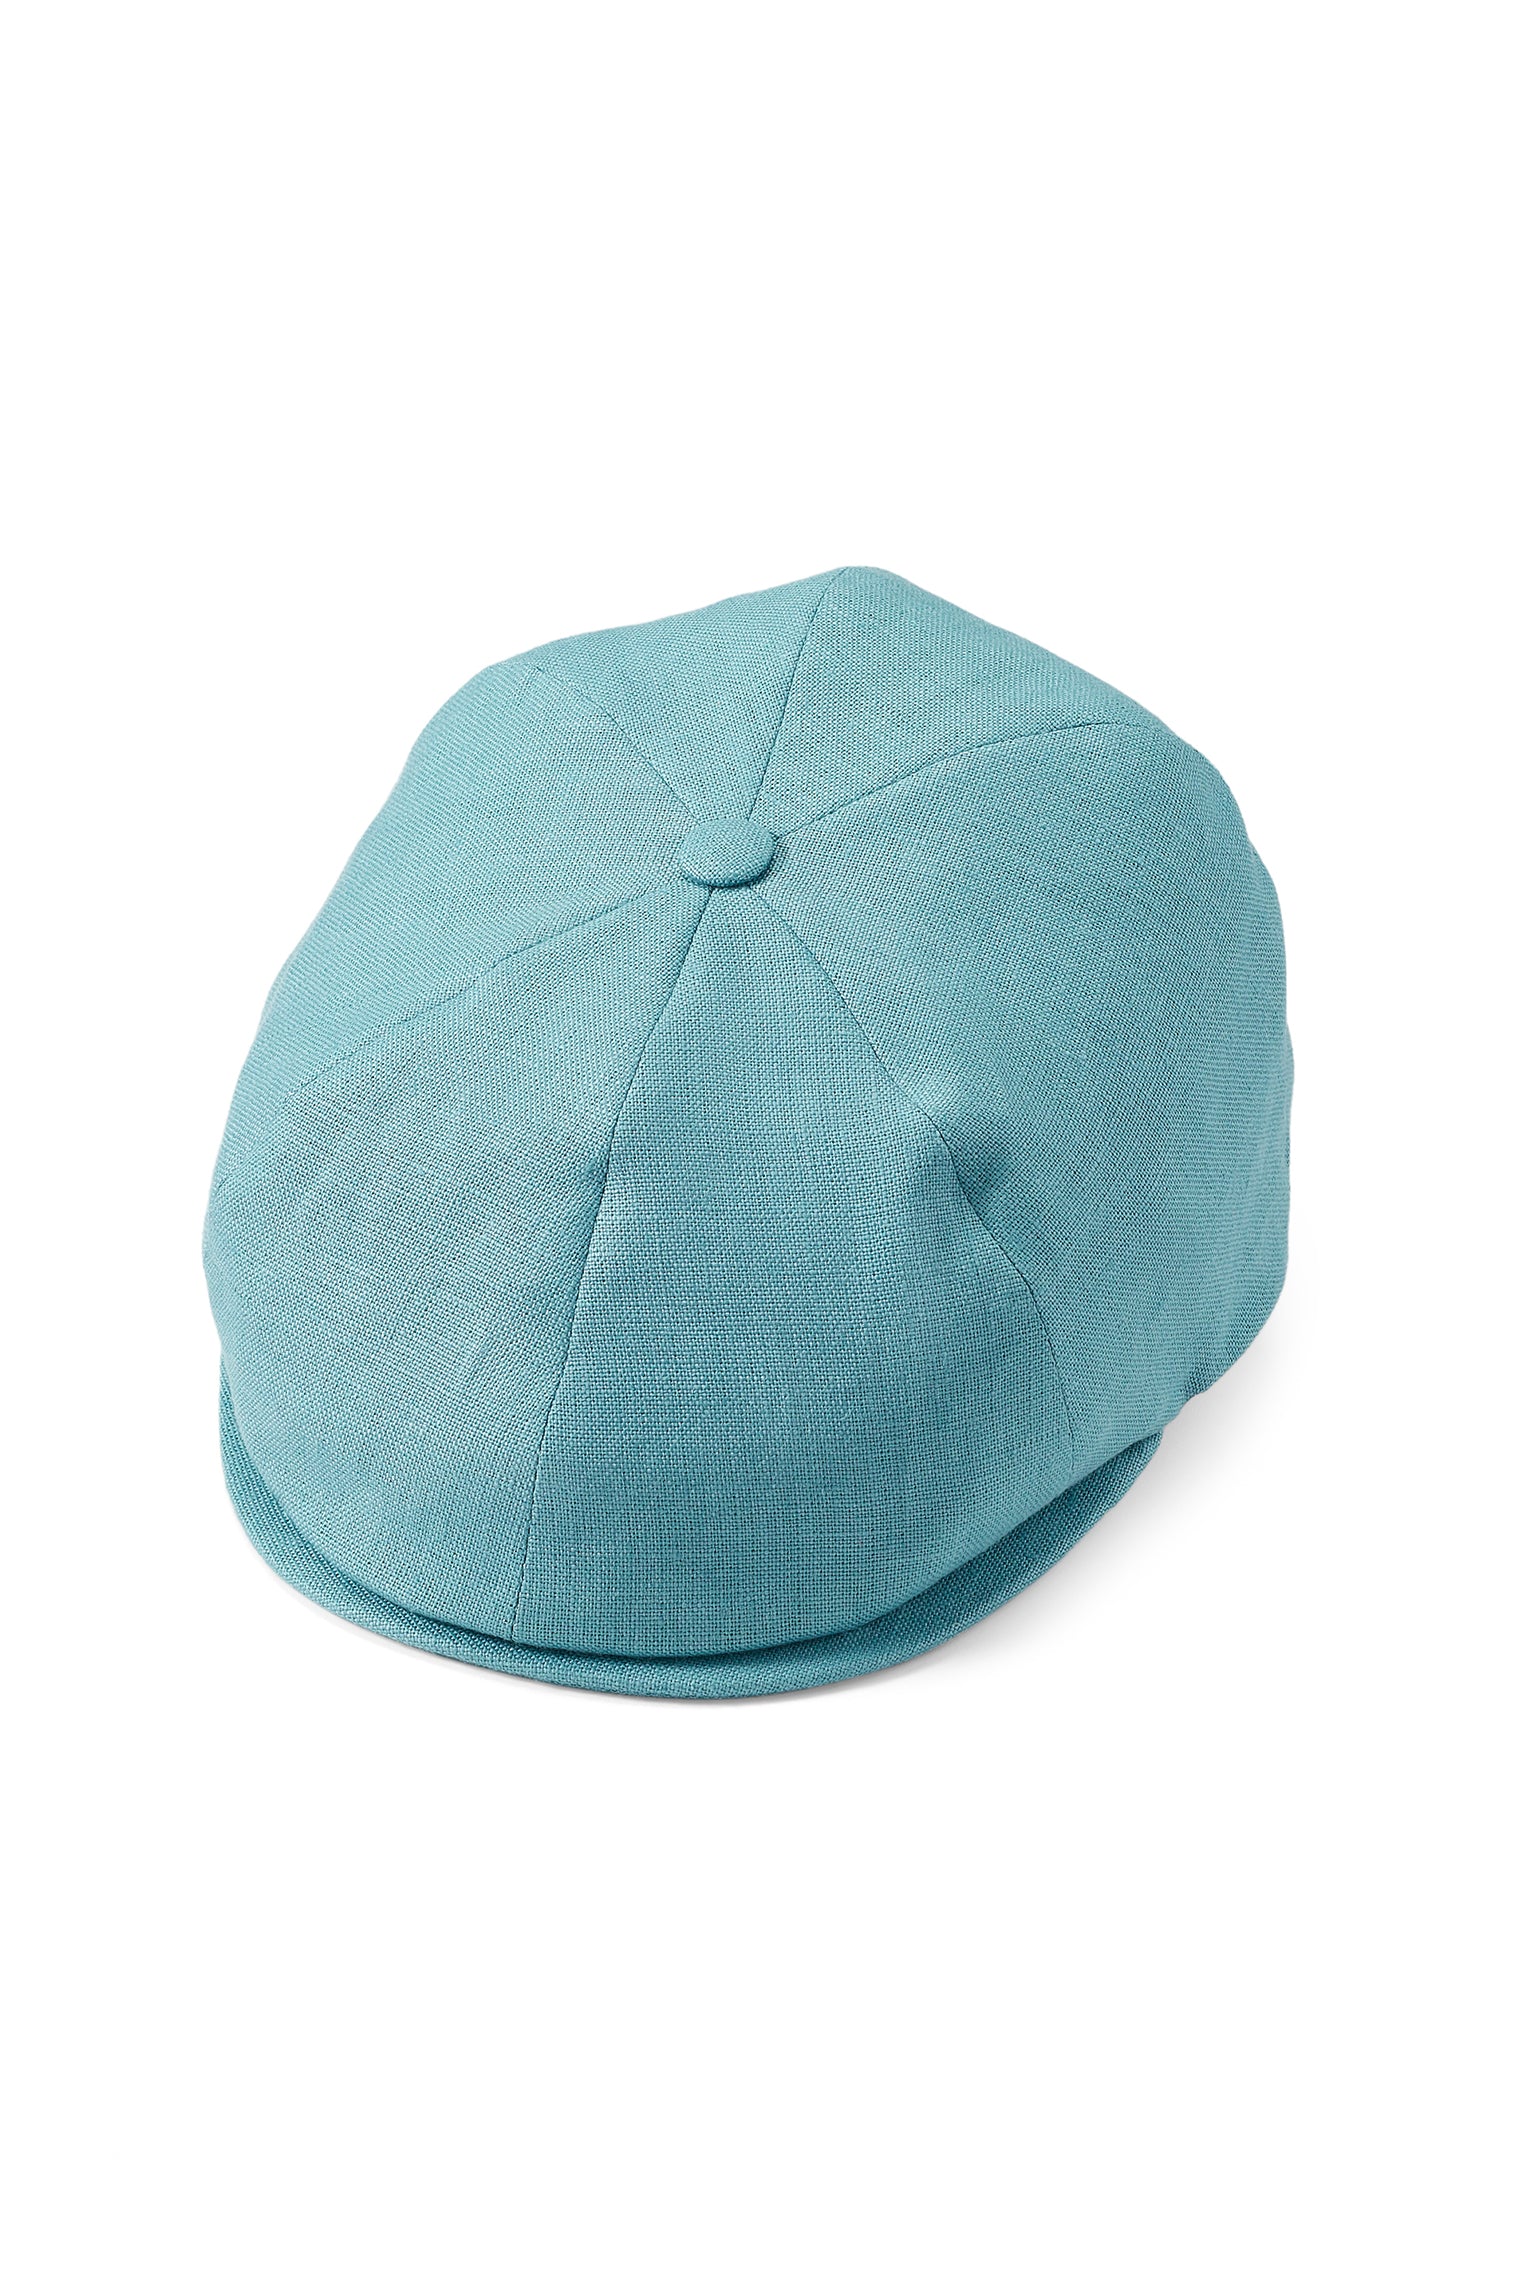 Tahoe Turquoise Bakerboy Cap - Best Selling Hats - Lock & Co. Hatters London UK